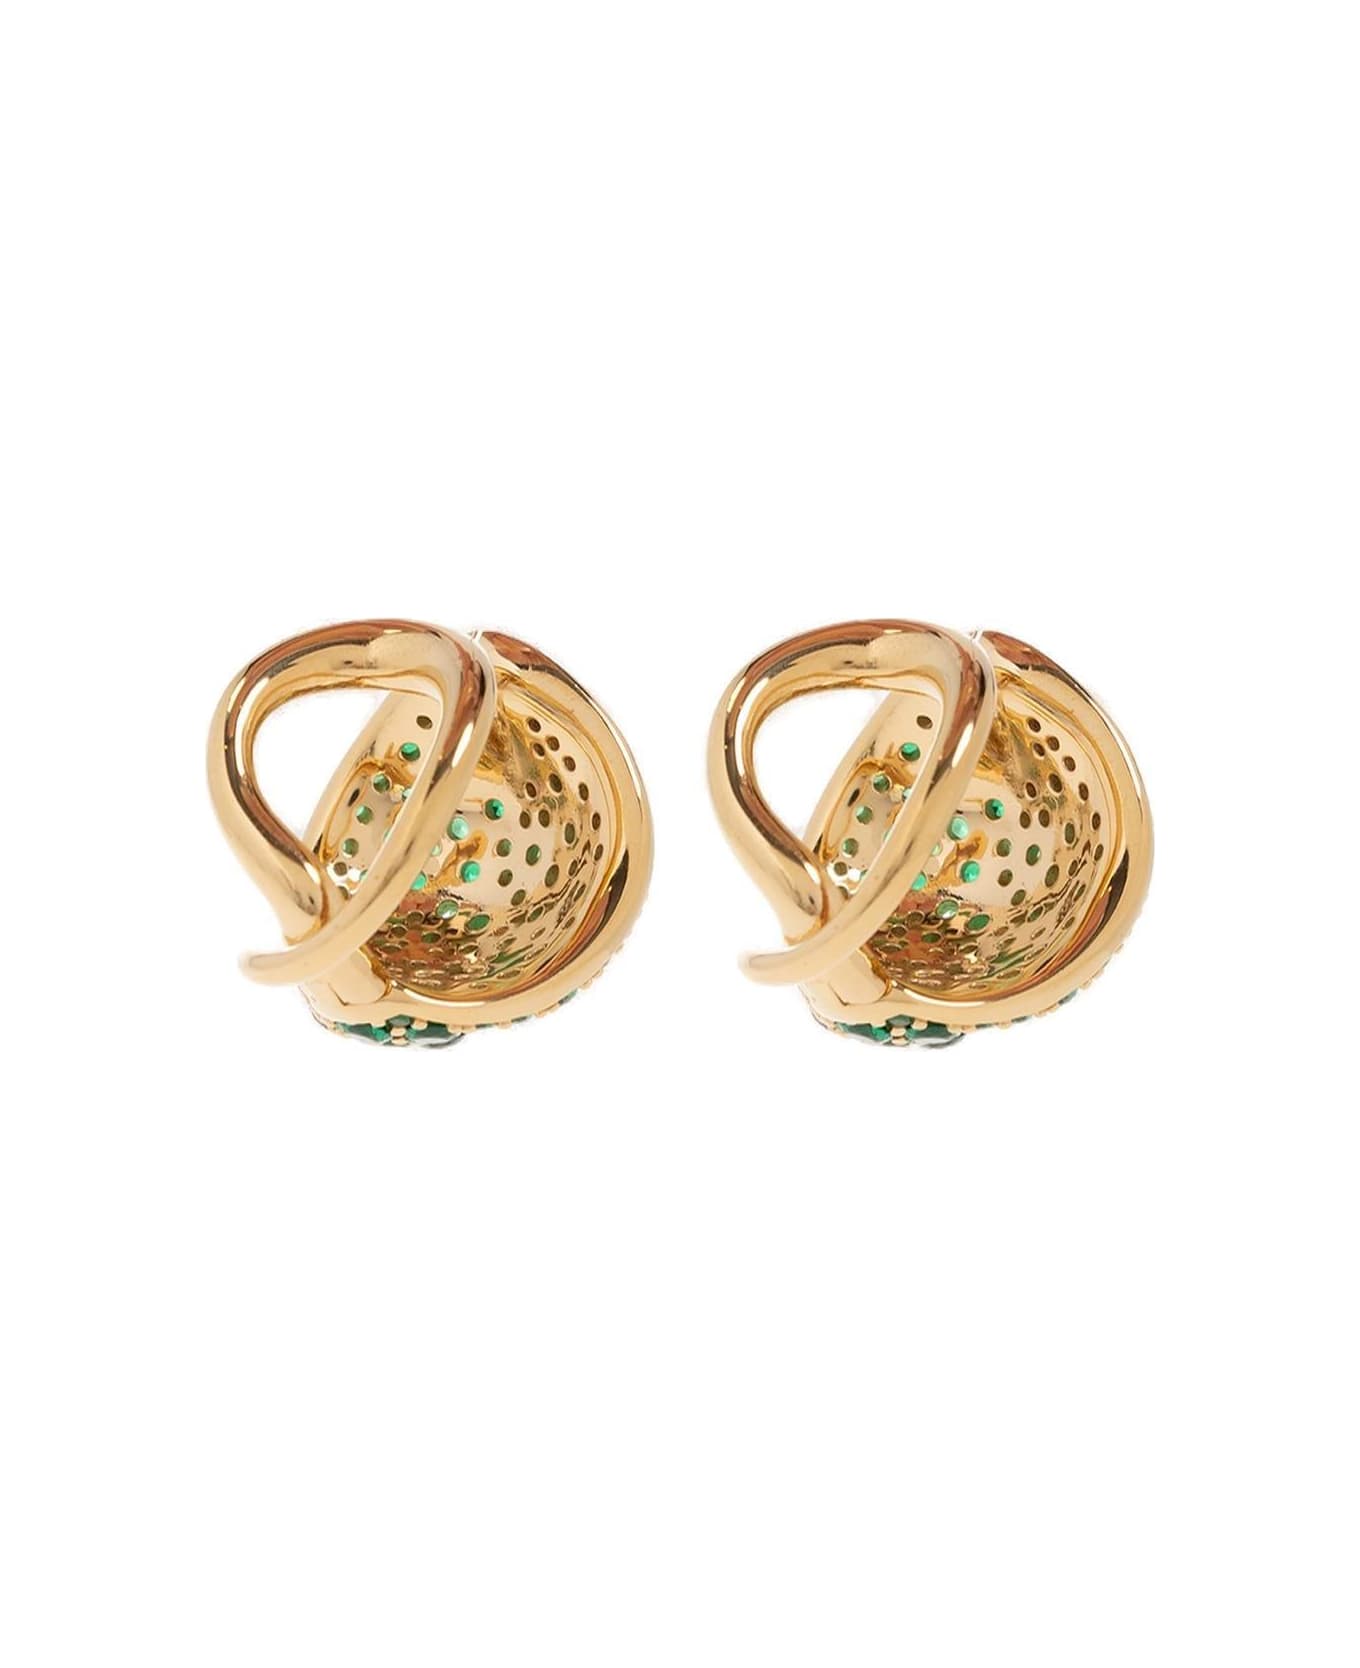 Bottega Veneta Raise Embellished Earrings - Gold イヤリング